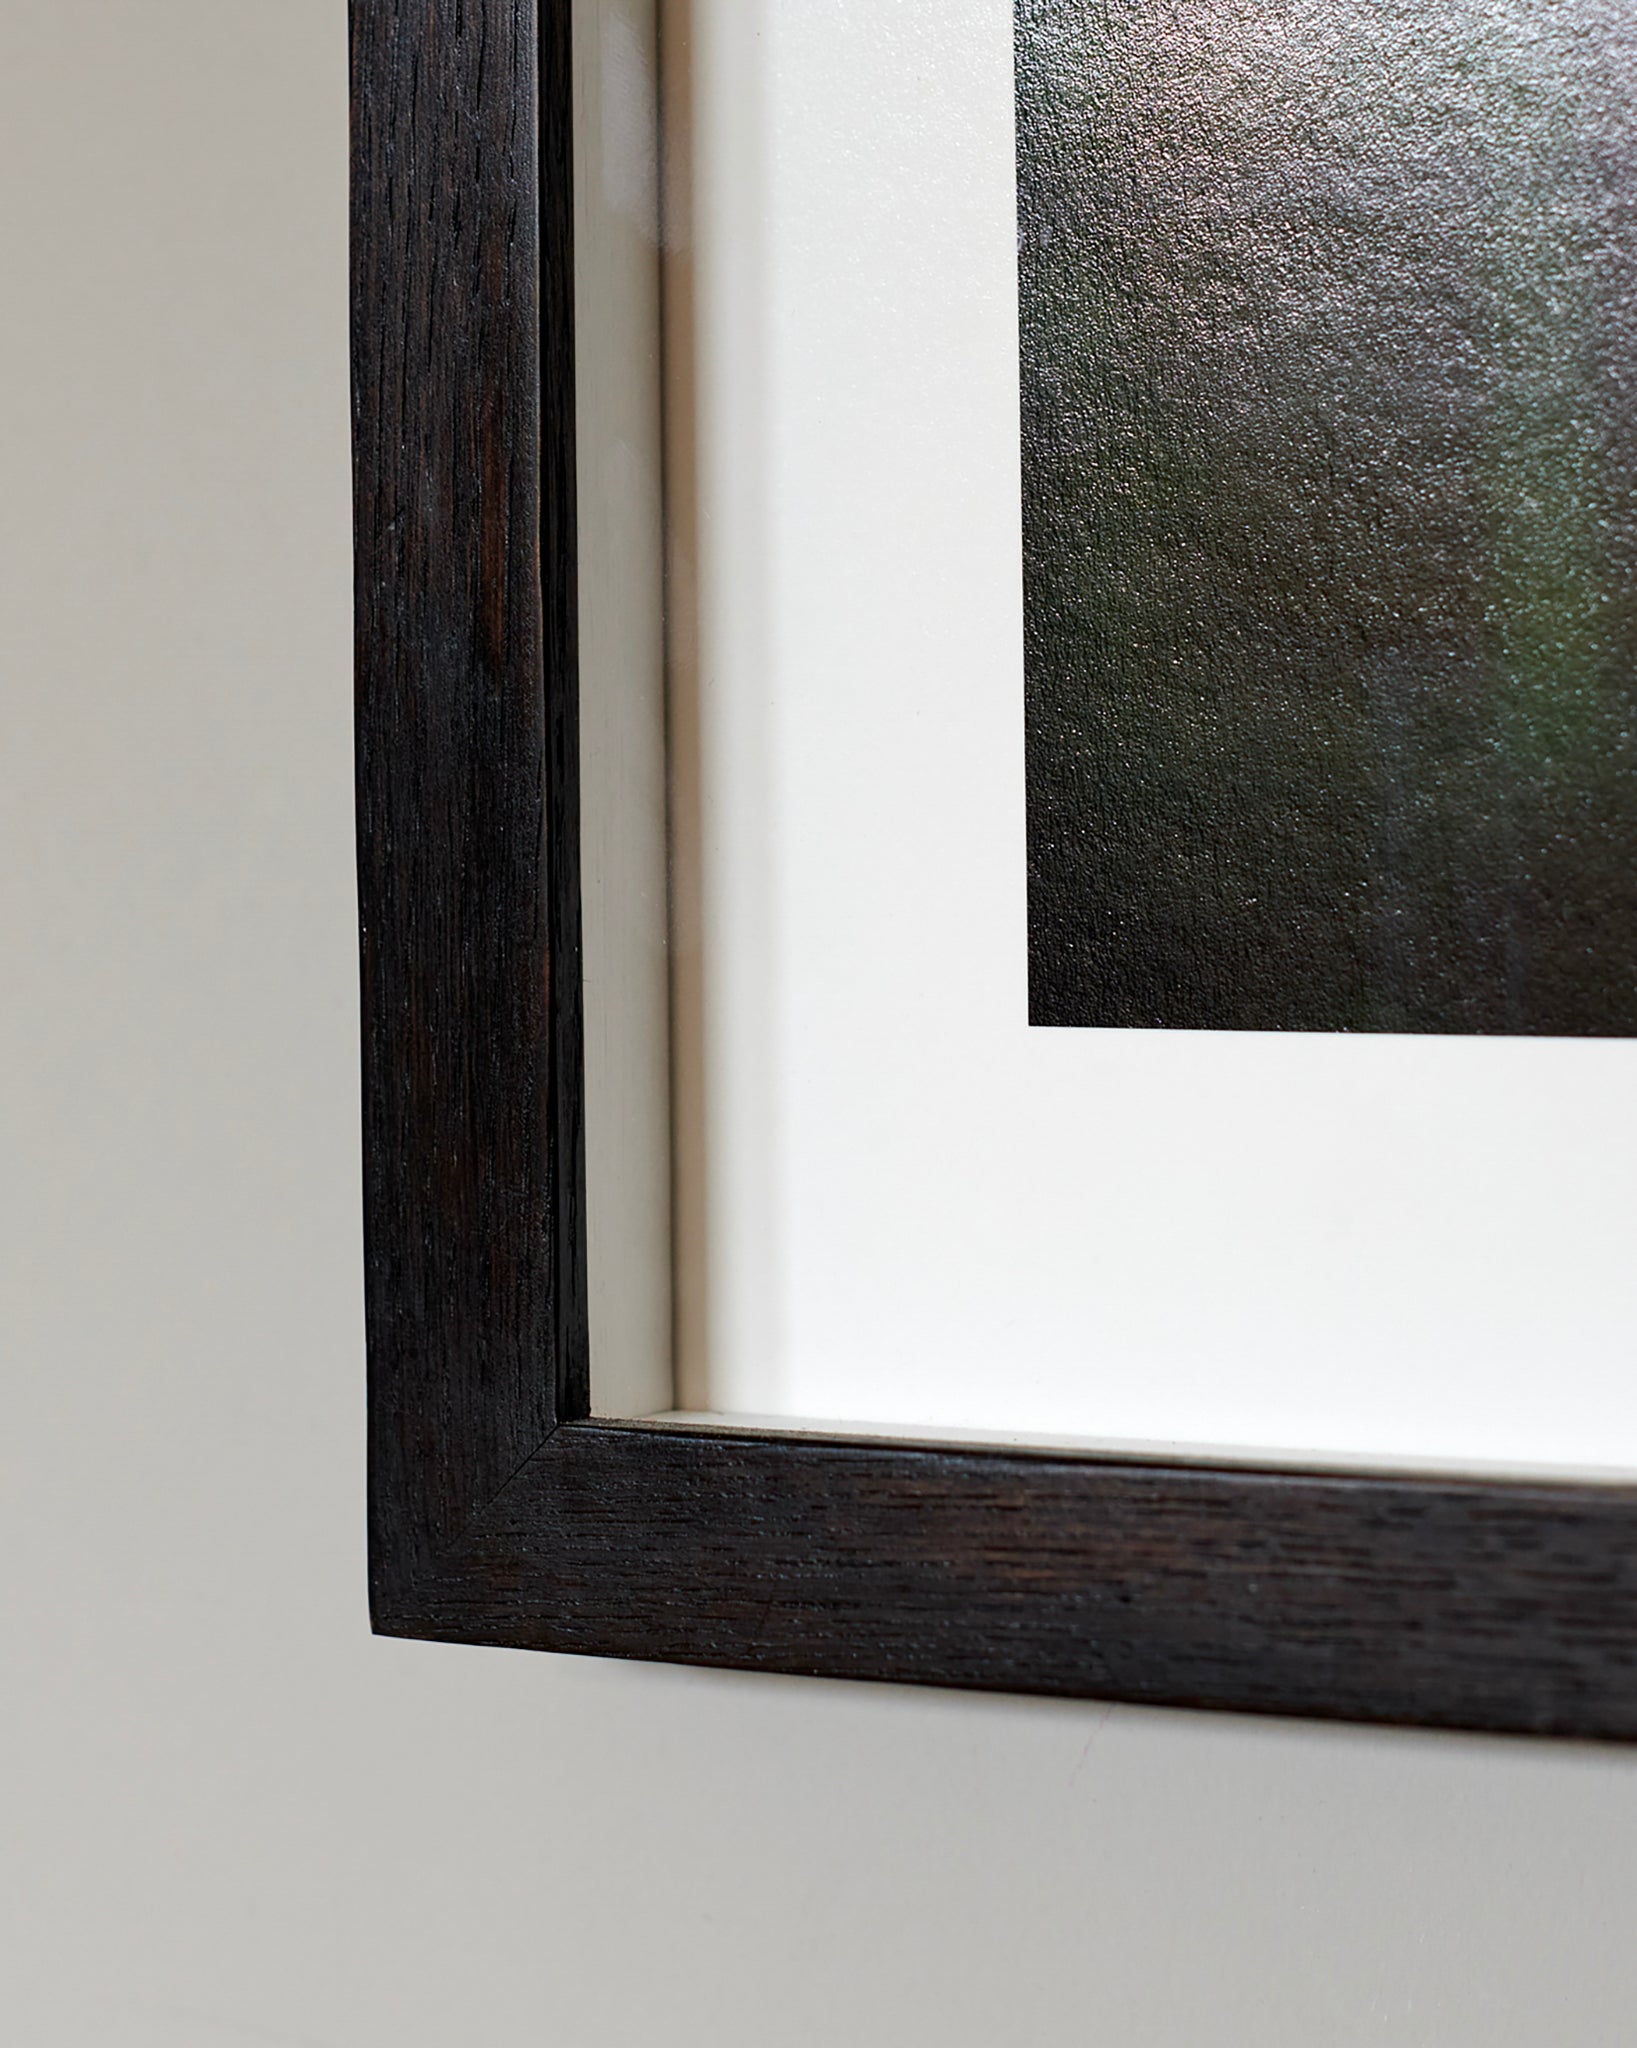 Corner detail of Bespoke Gallery Quality Black Wood Box Spacer Frame With Anti-Reflect ArtGlass.